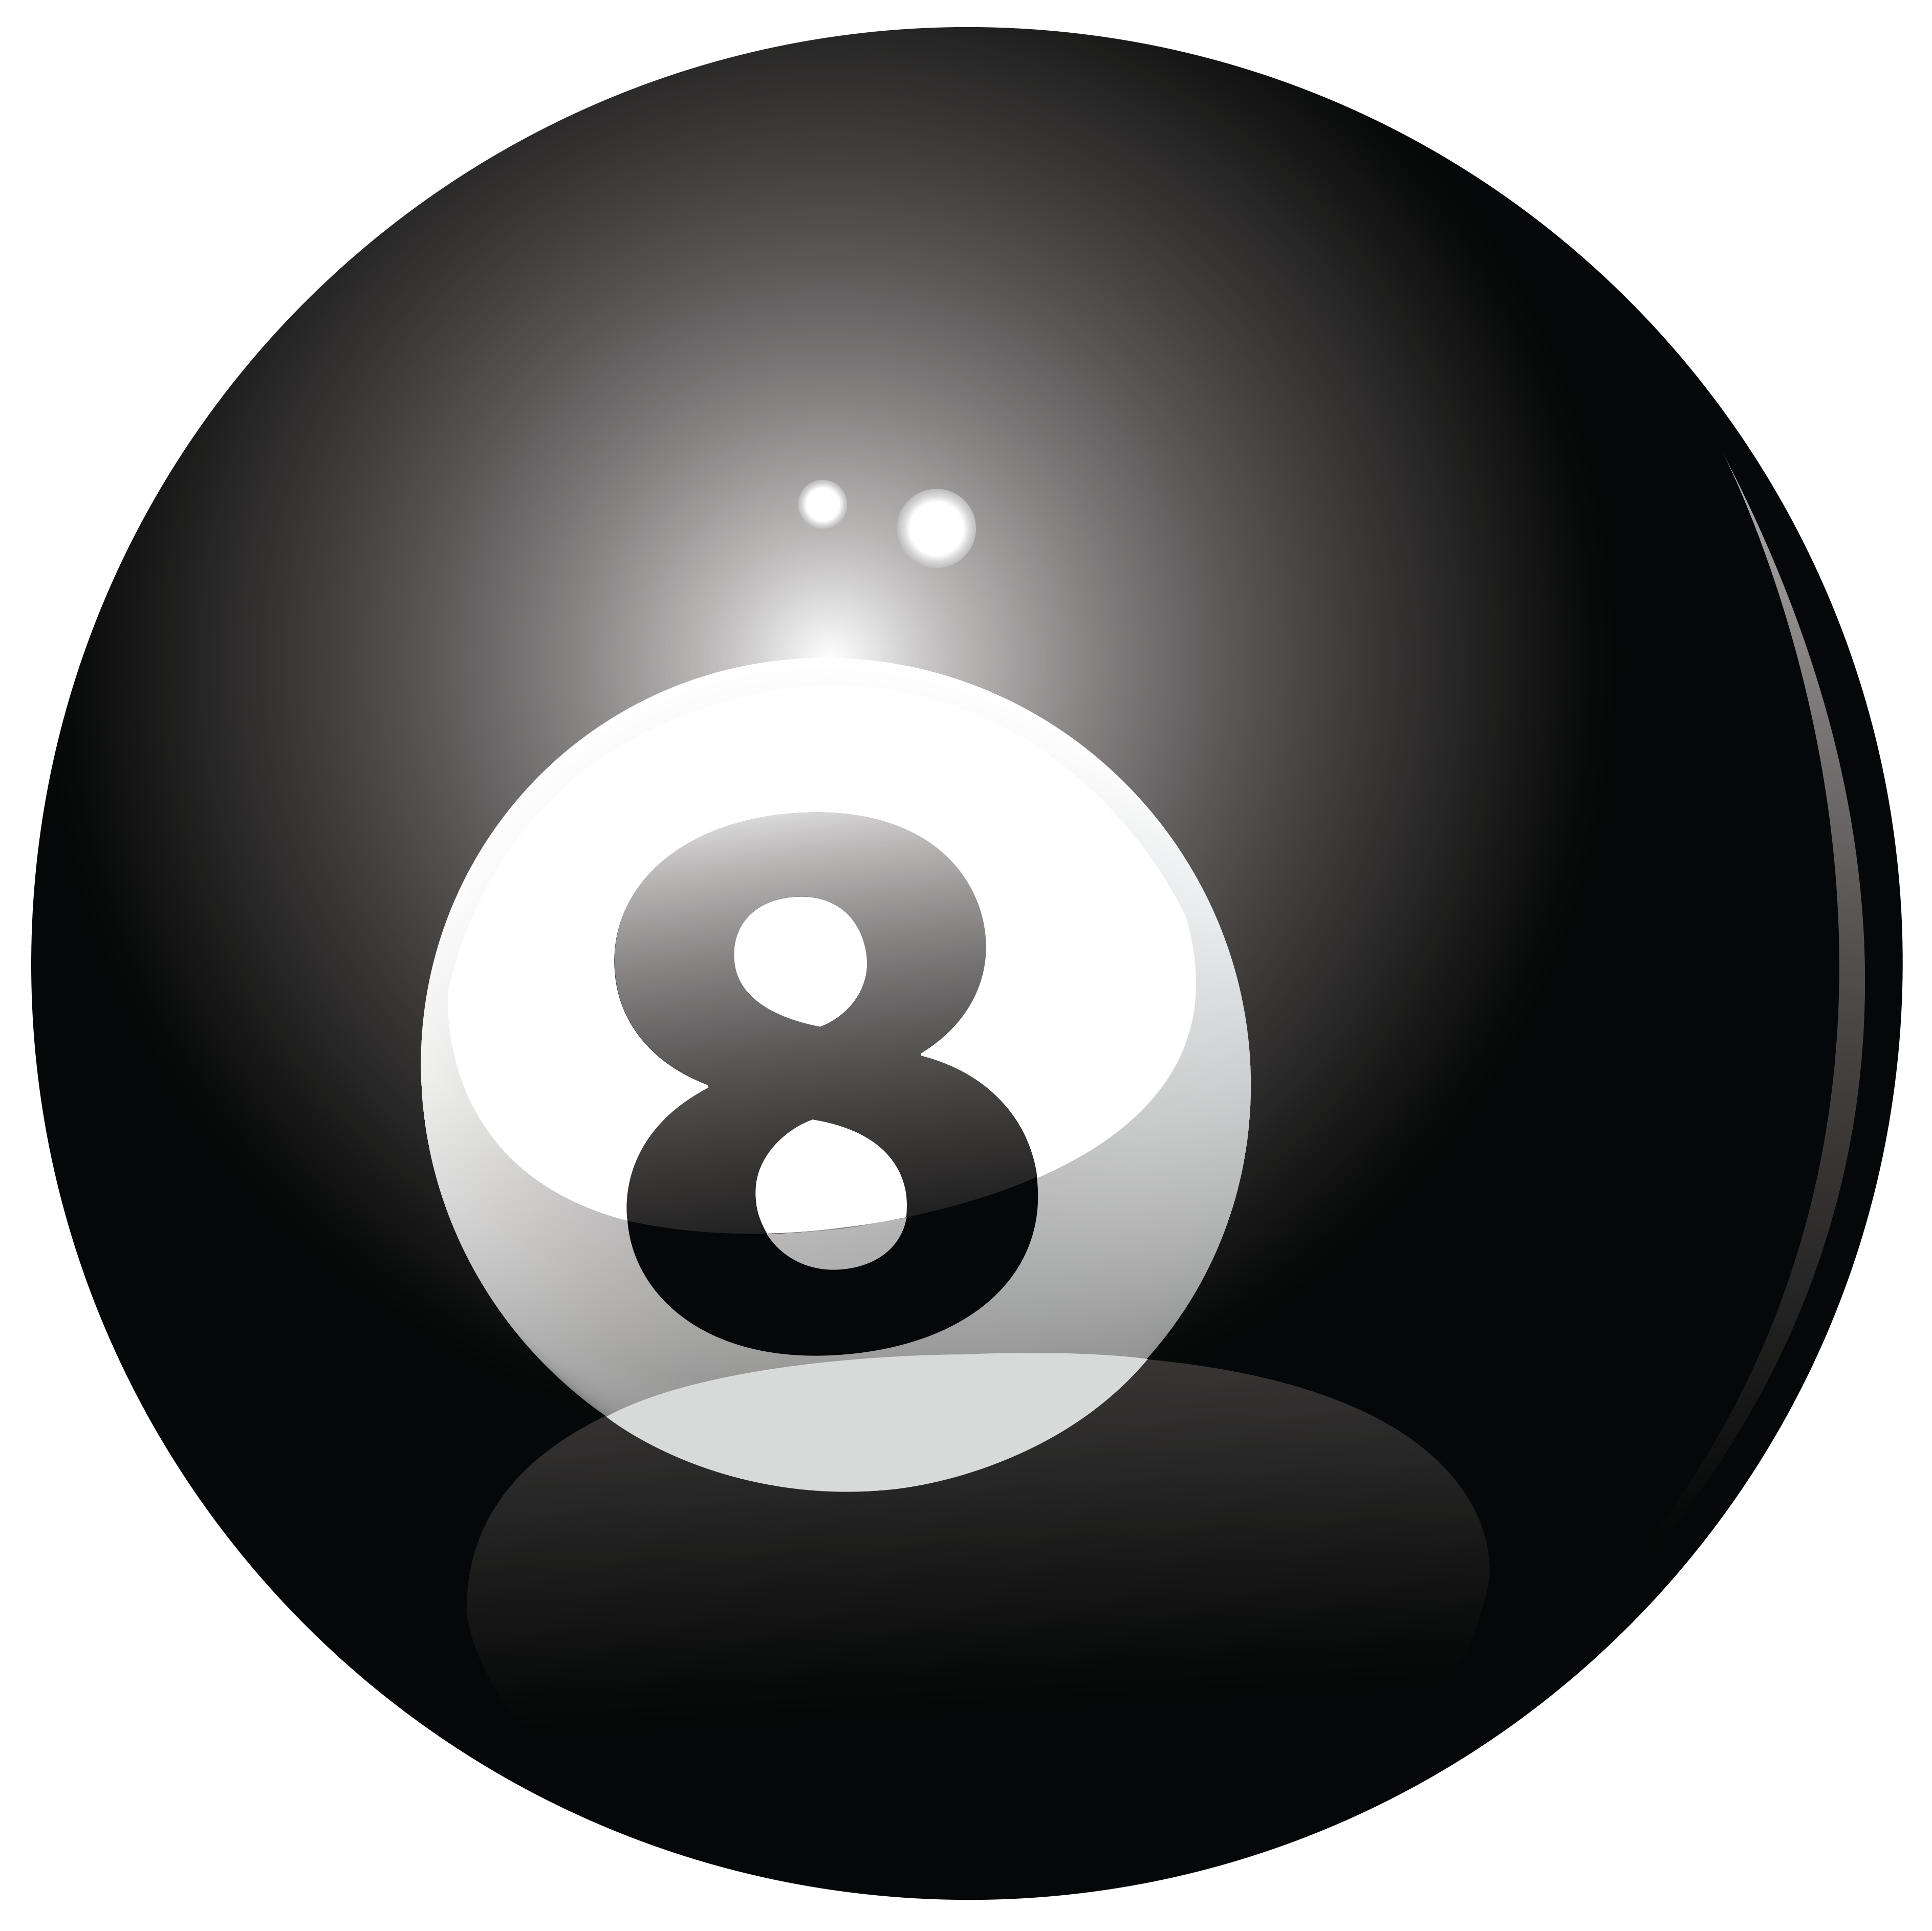 Шаре икс. Бильярд "8 Ball Pool". Черный бильярдный шар. Бильярдный шар без фона. Шар восьмерка бильярд.